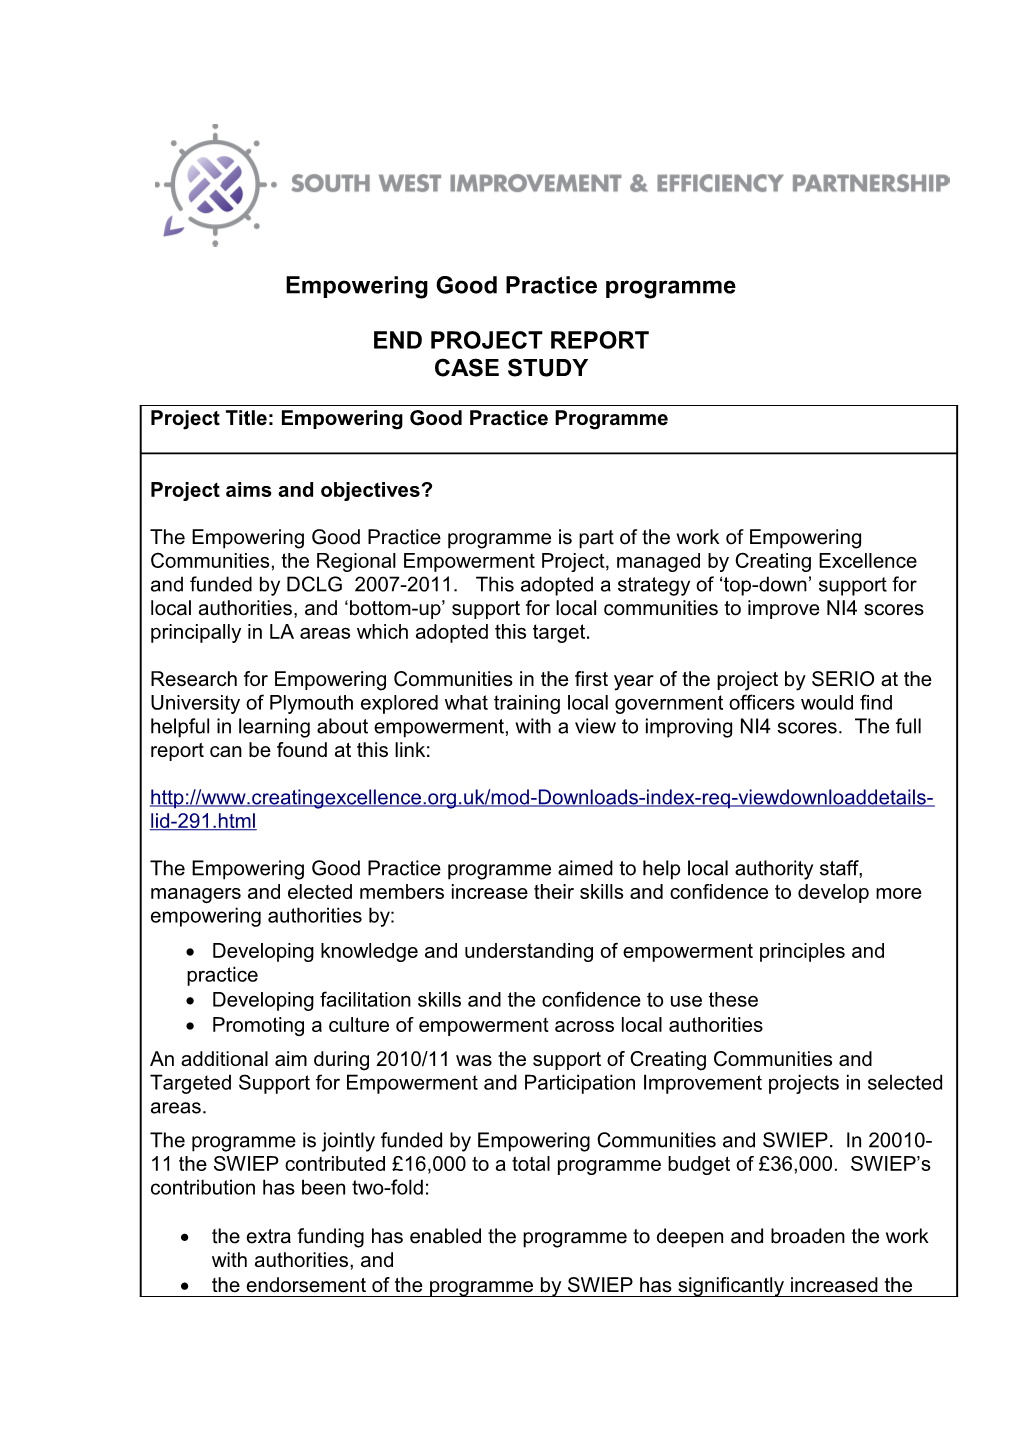 Empowering Good Practice Programme